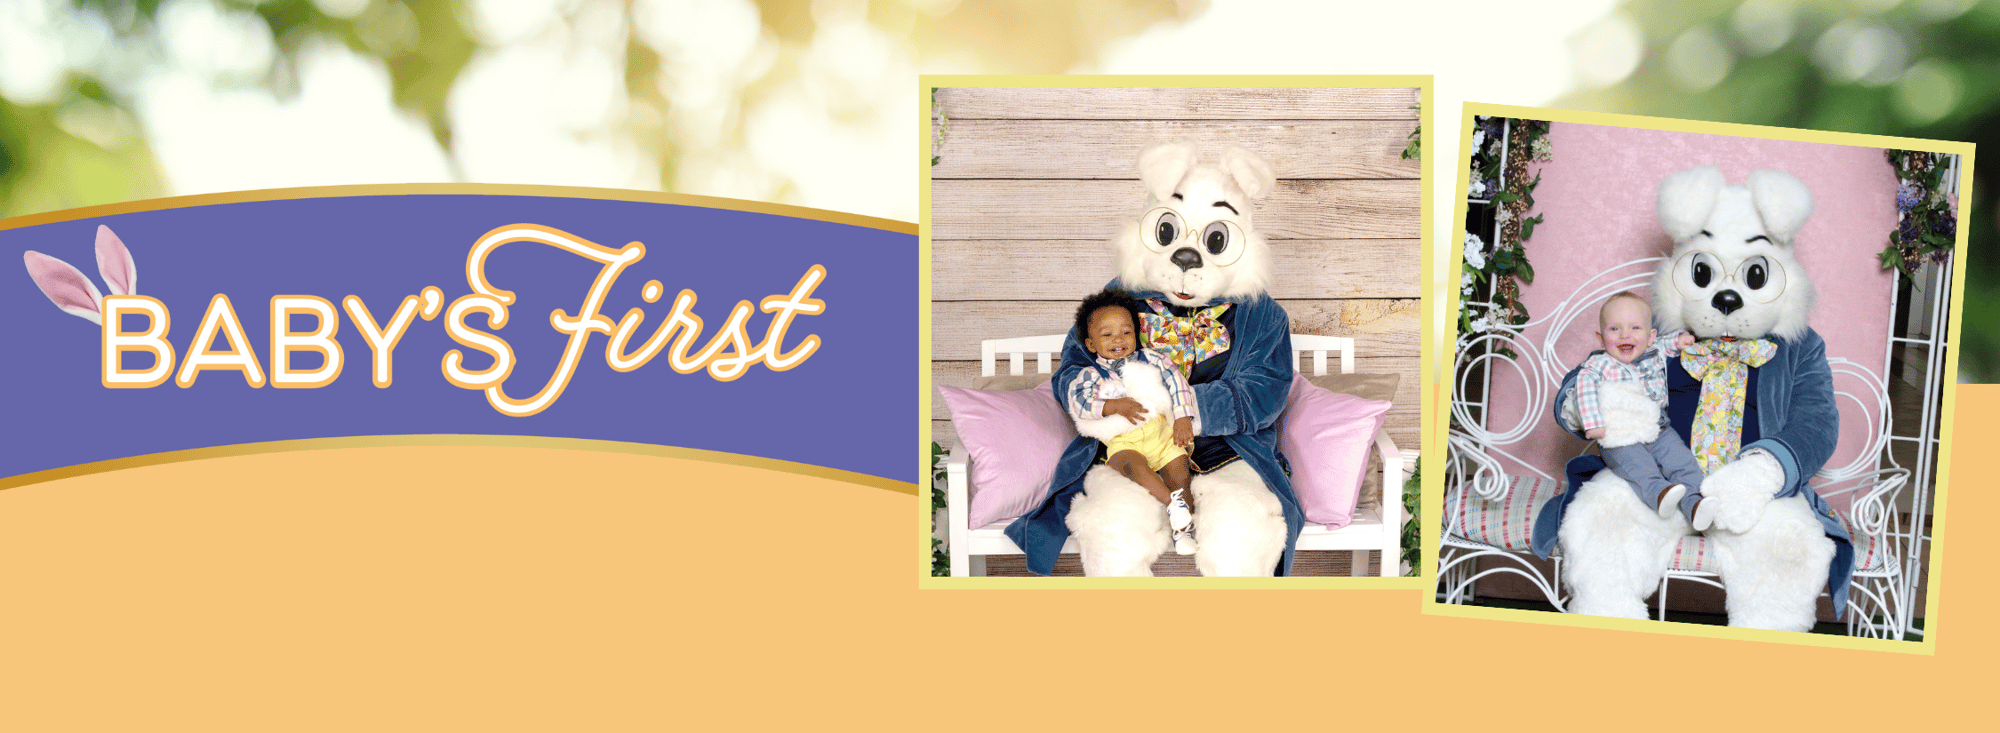 BABYS FIRST - Web Banner (3)